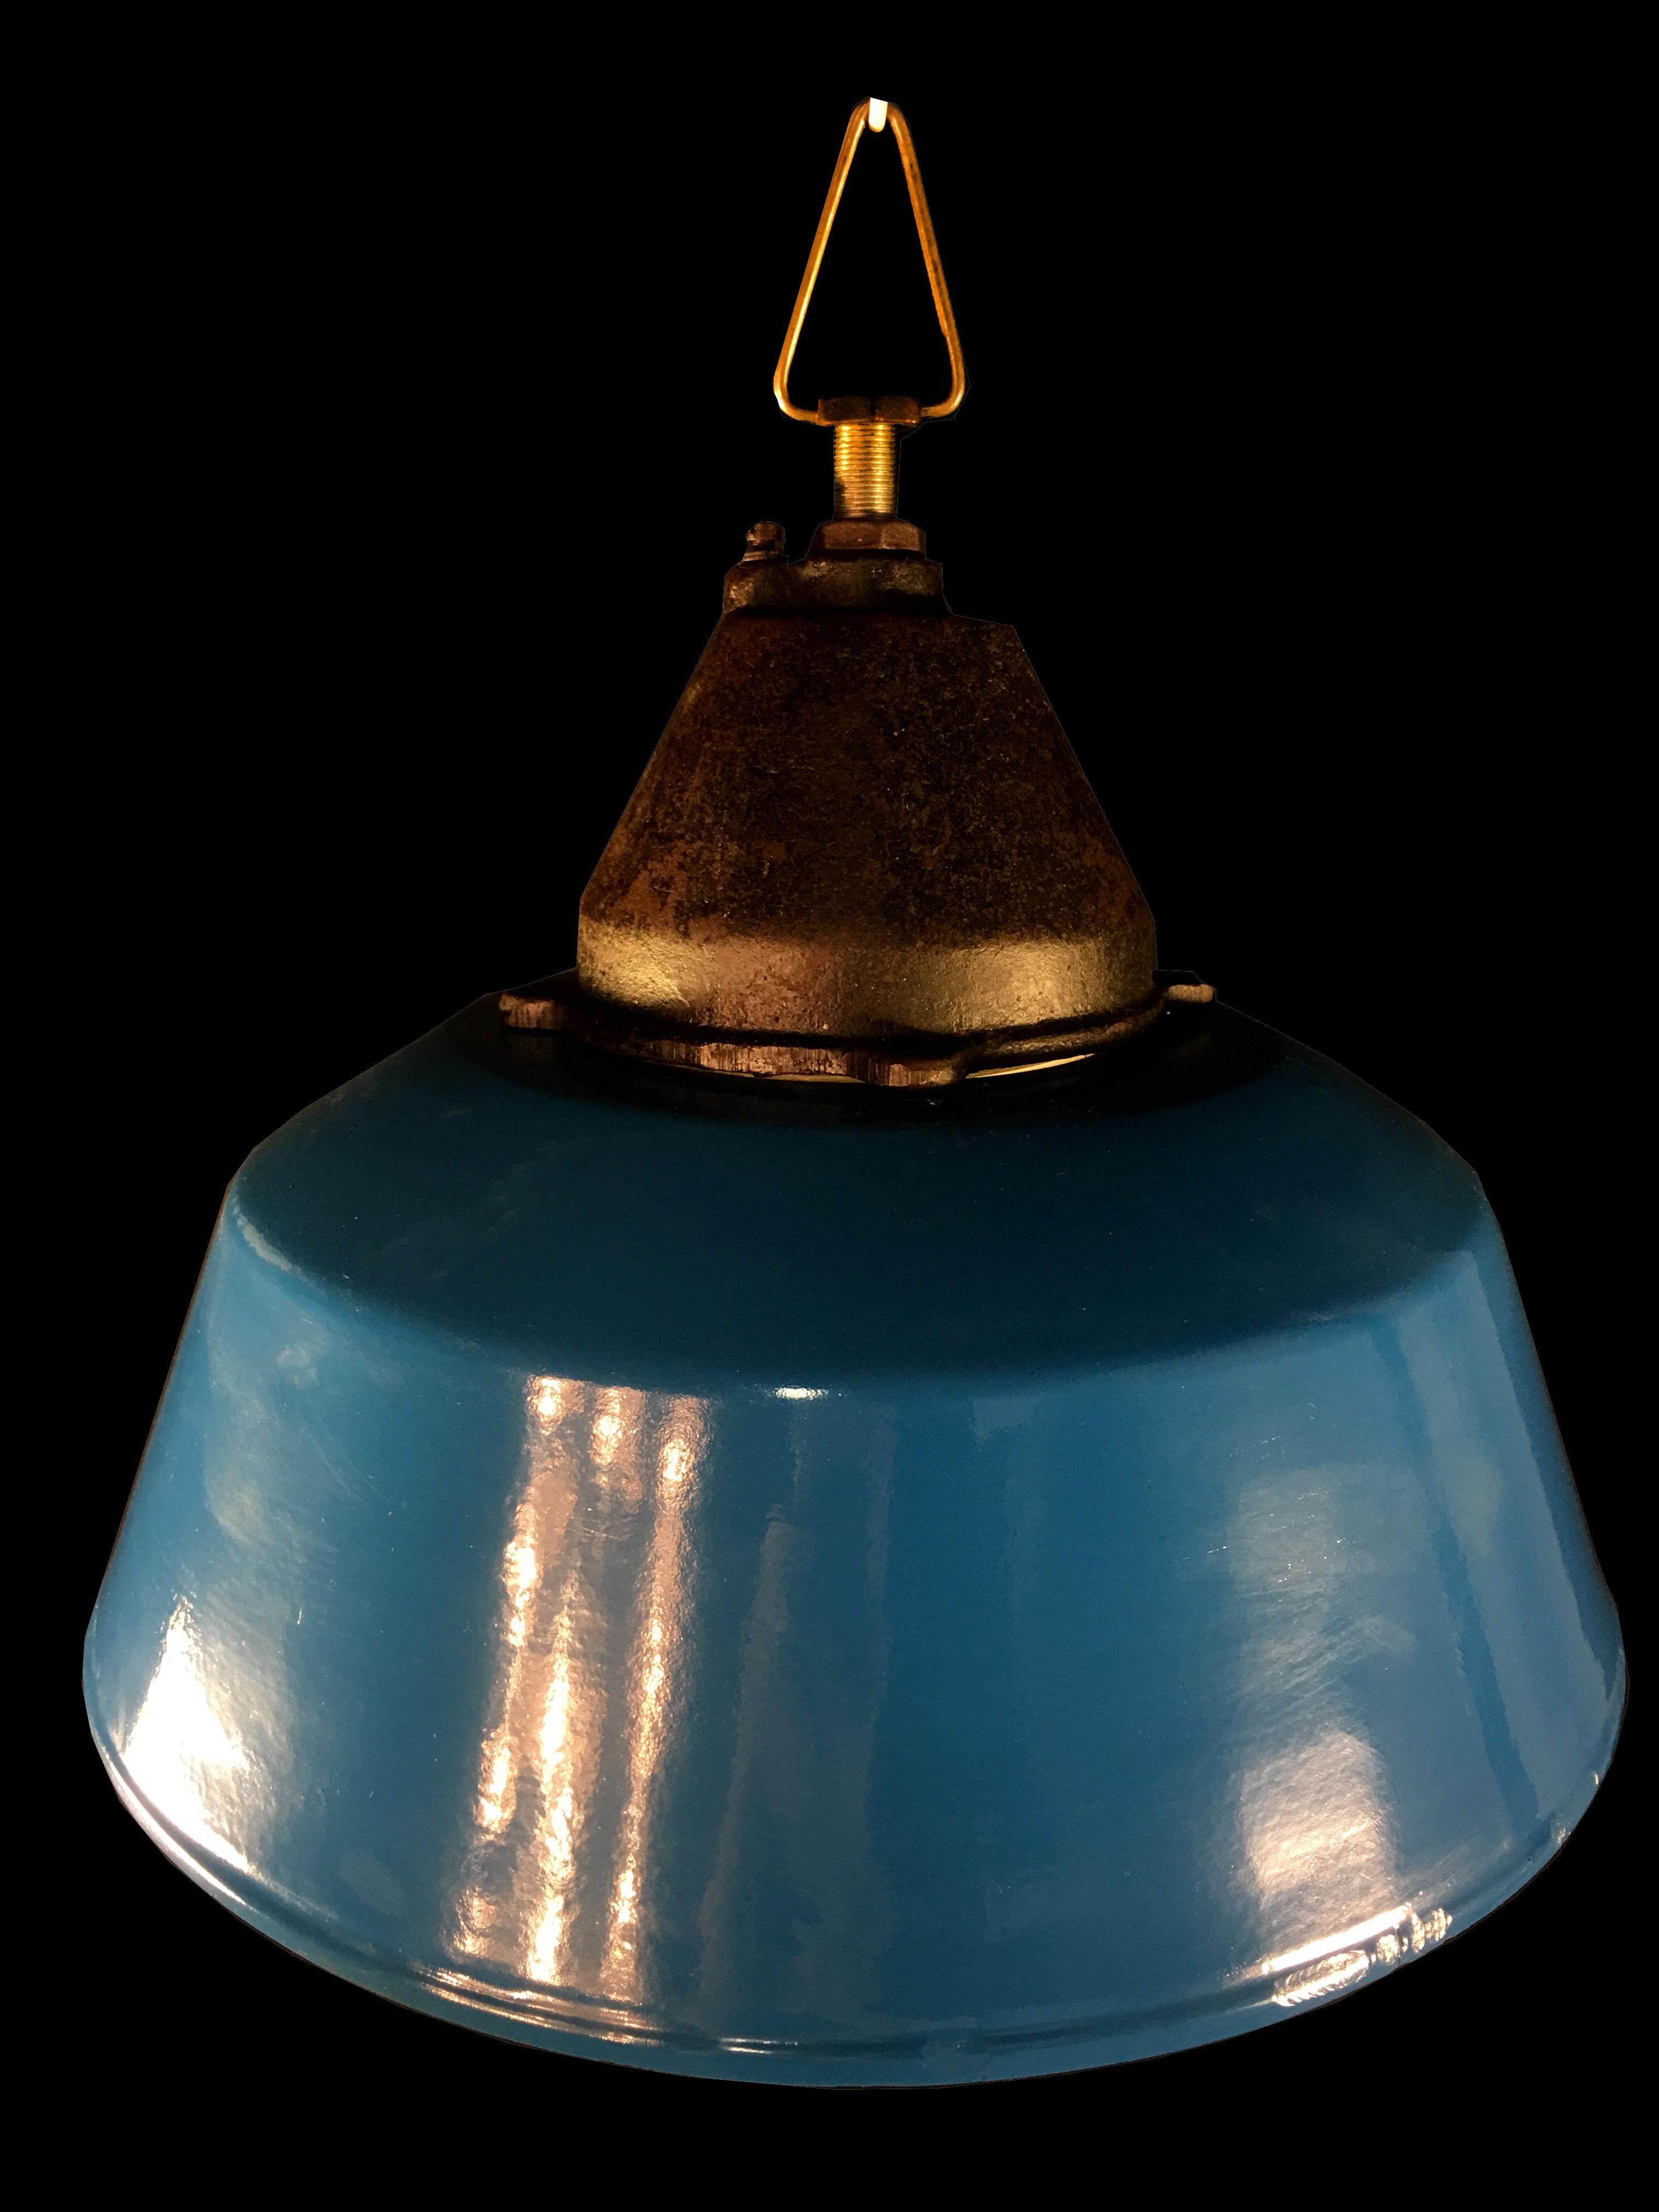 1950's pendant lights